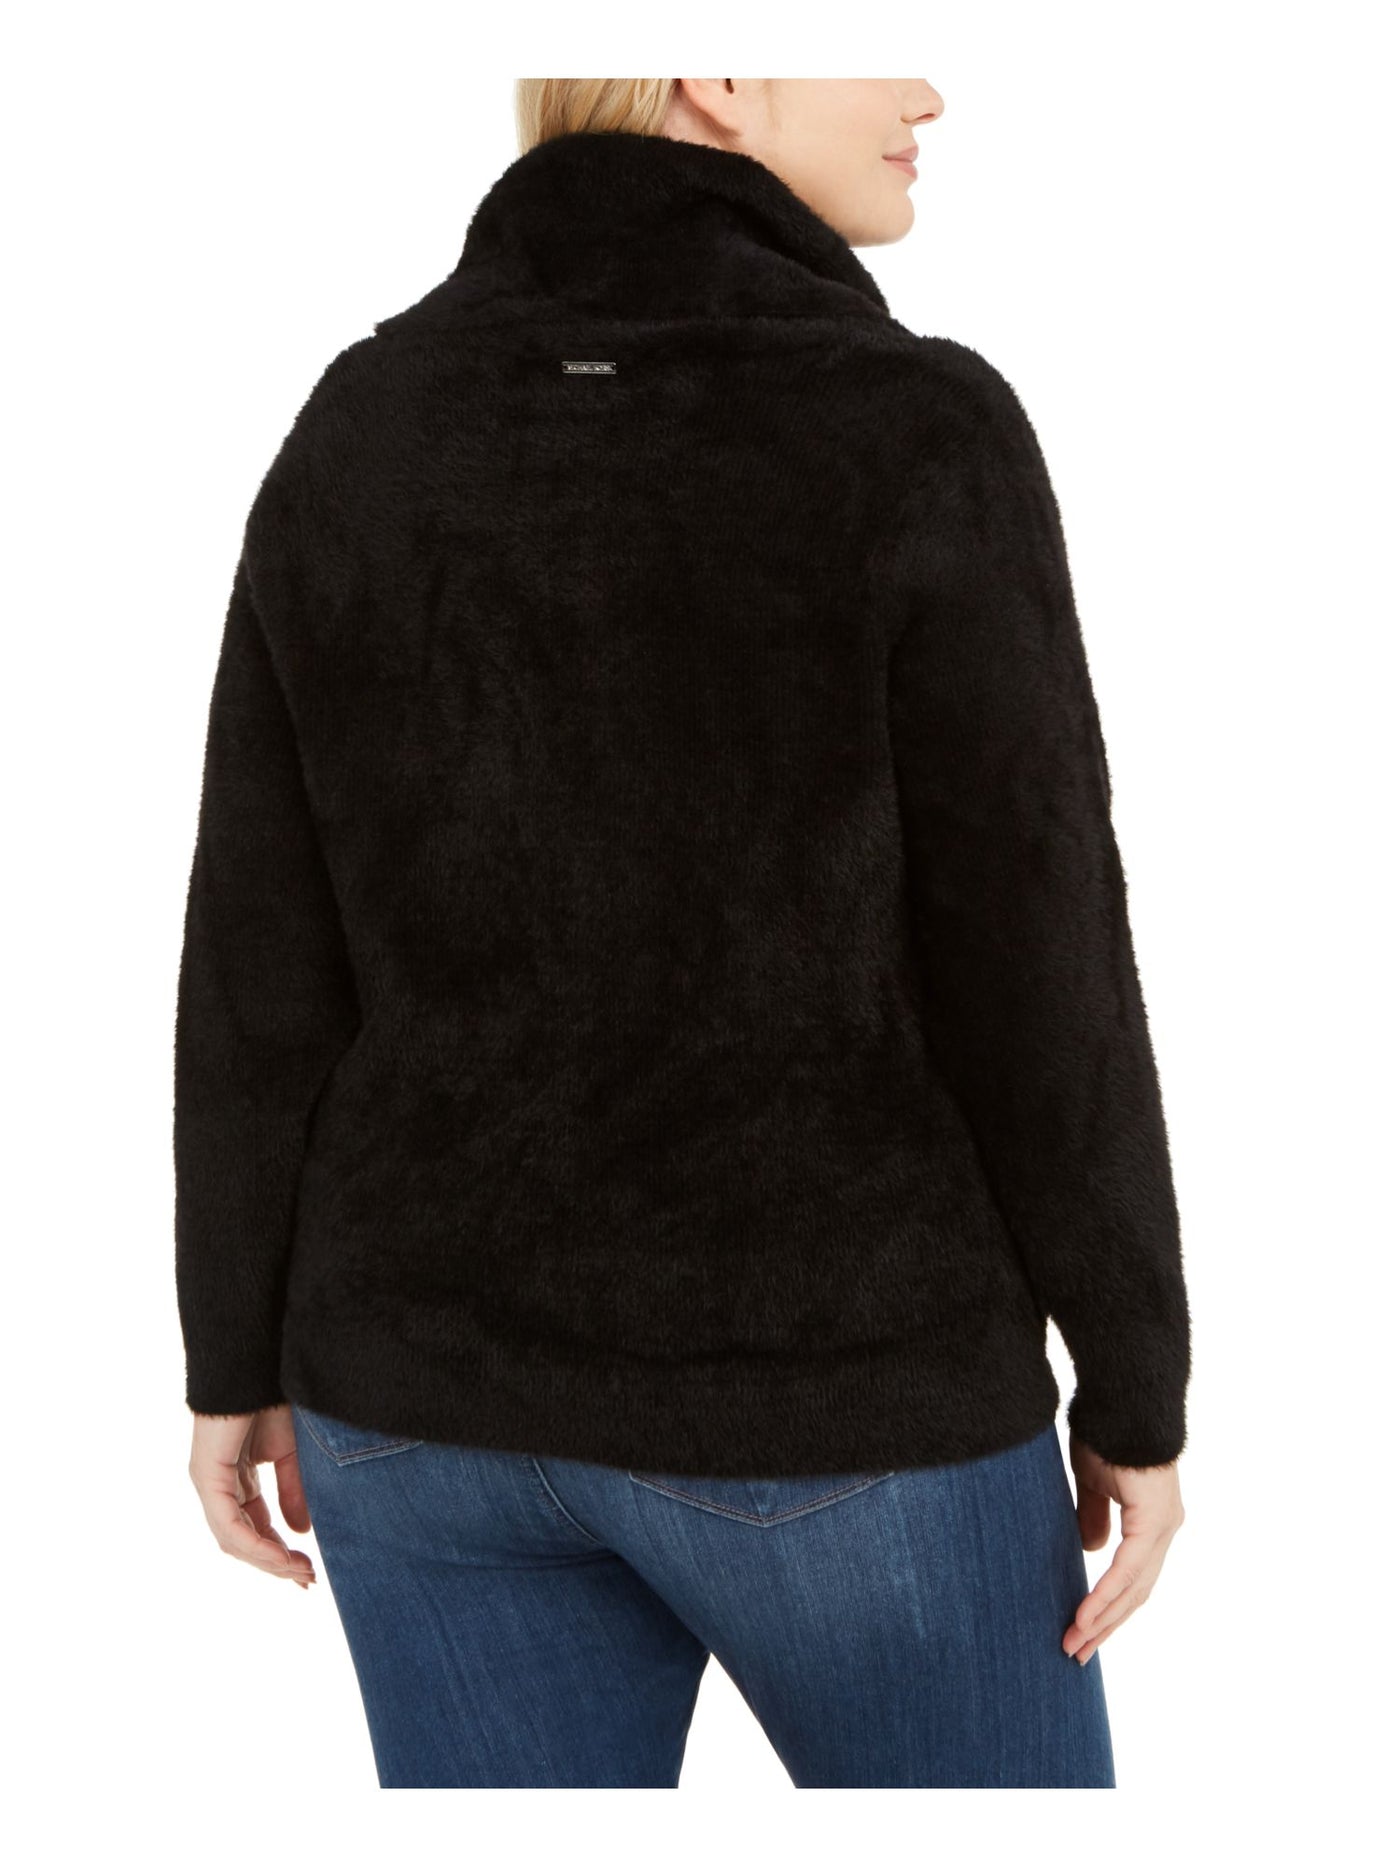 MICHAEL KORS Womens Black Long Sleeve Turtle Neck Sweater Plus 0X